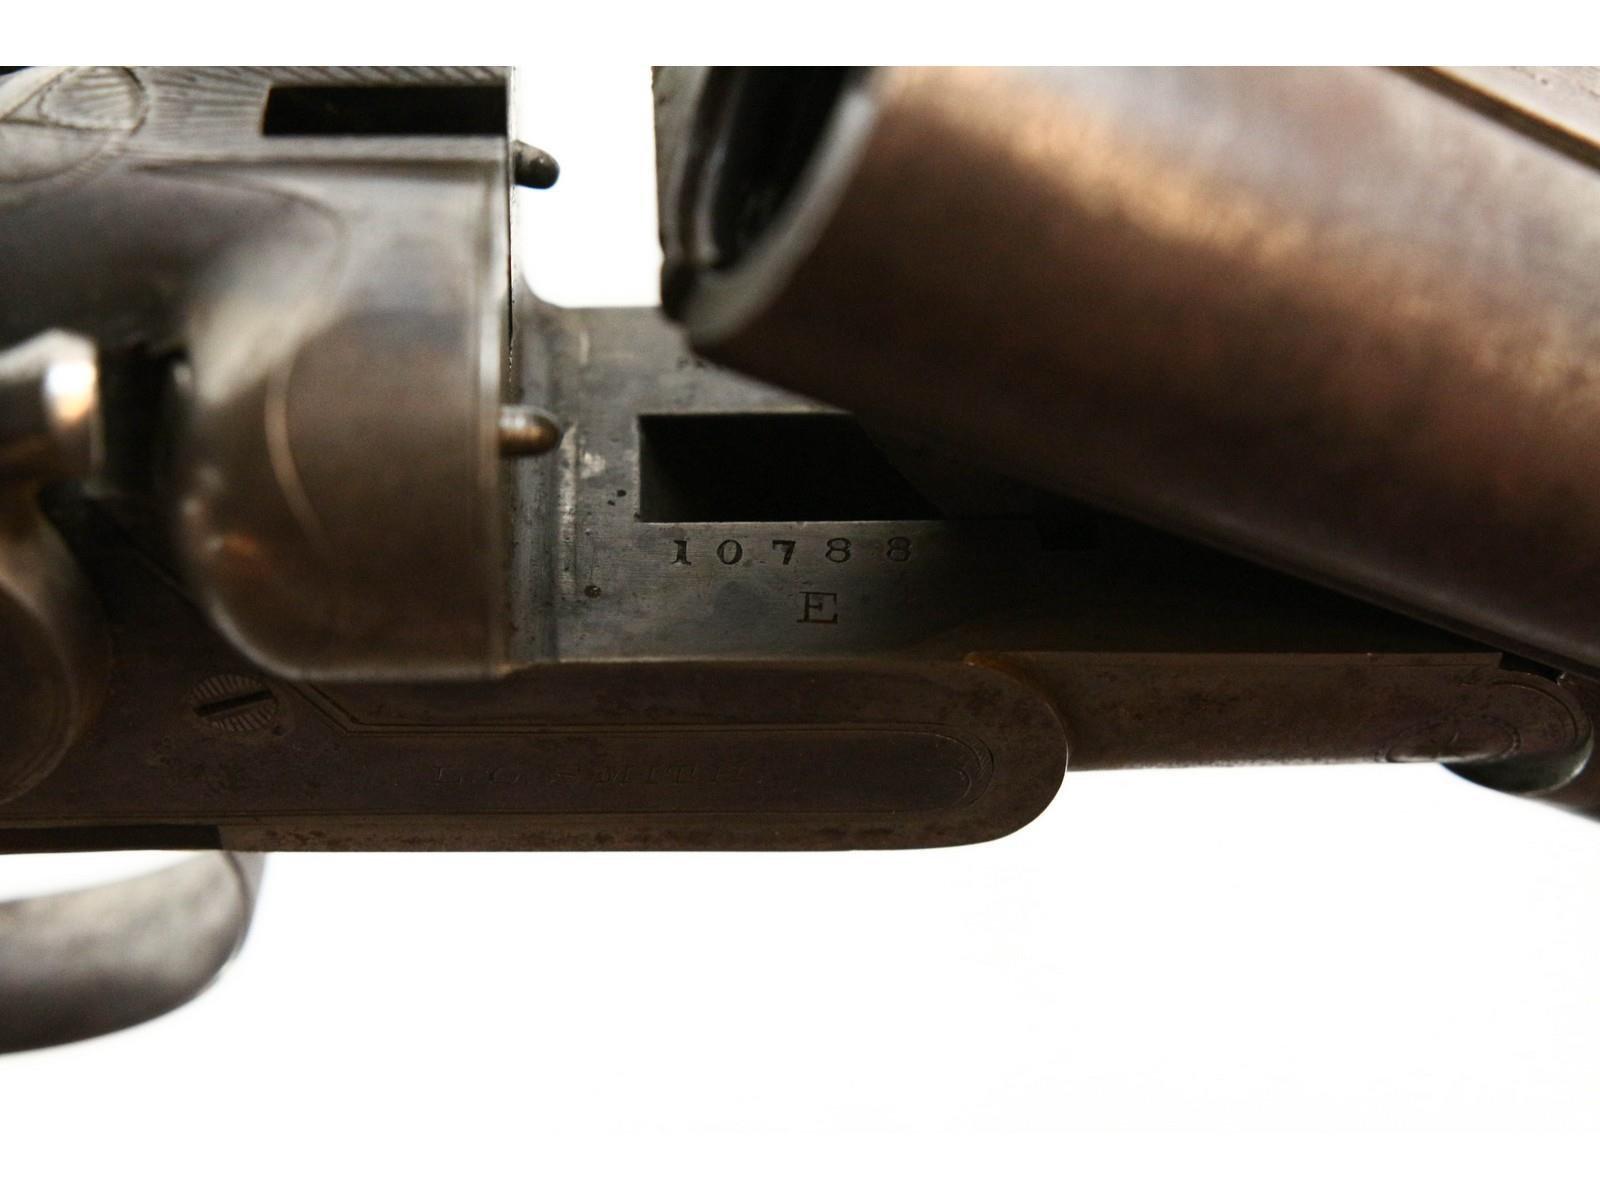 L.C. Smith Double Barrel Hammer Shotgun 12 Gauge